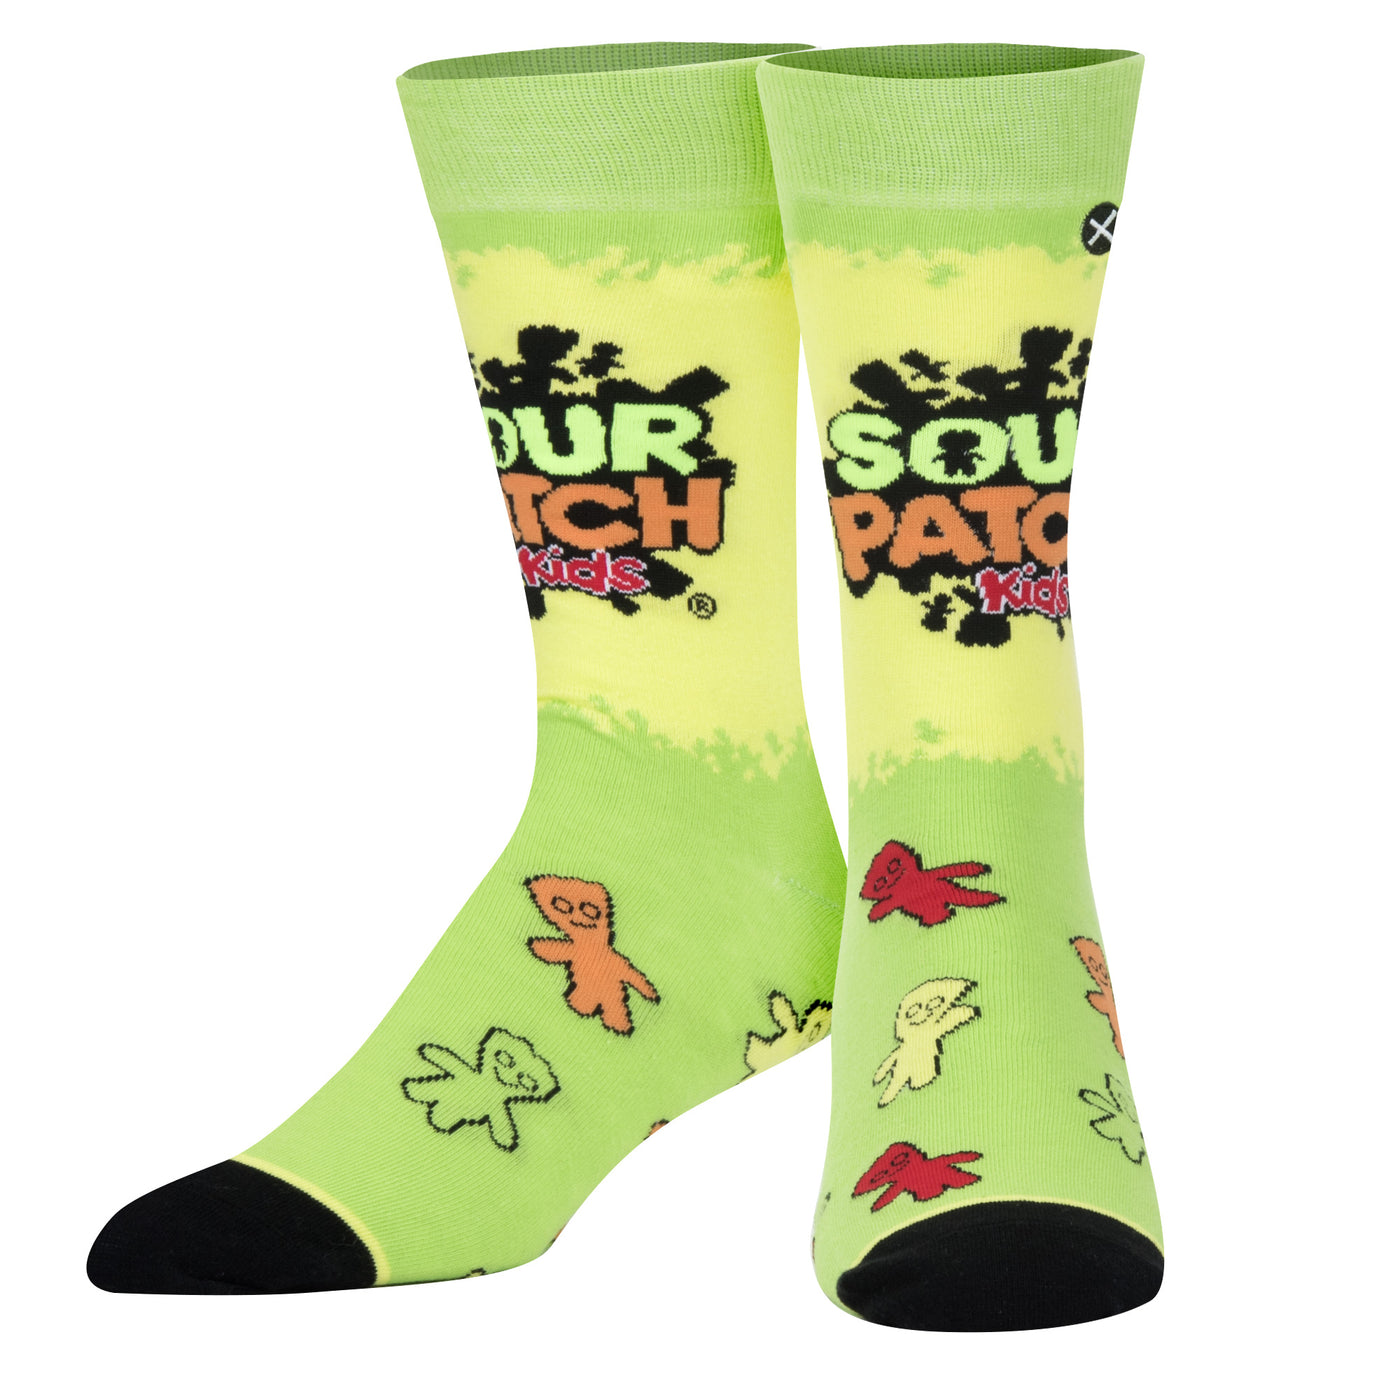 Sour Patch Kids Crew Socks